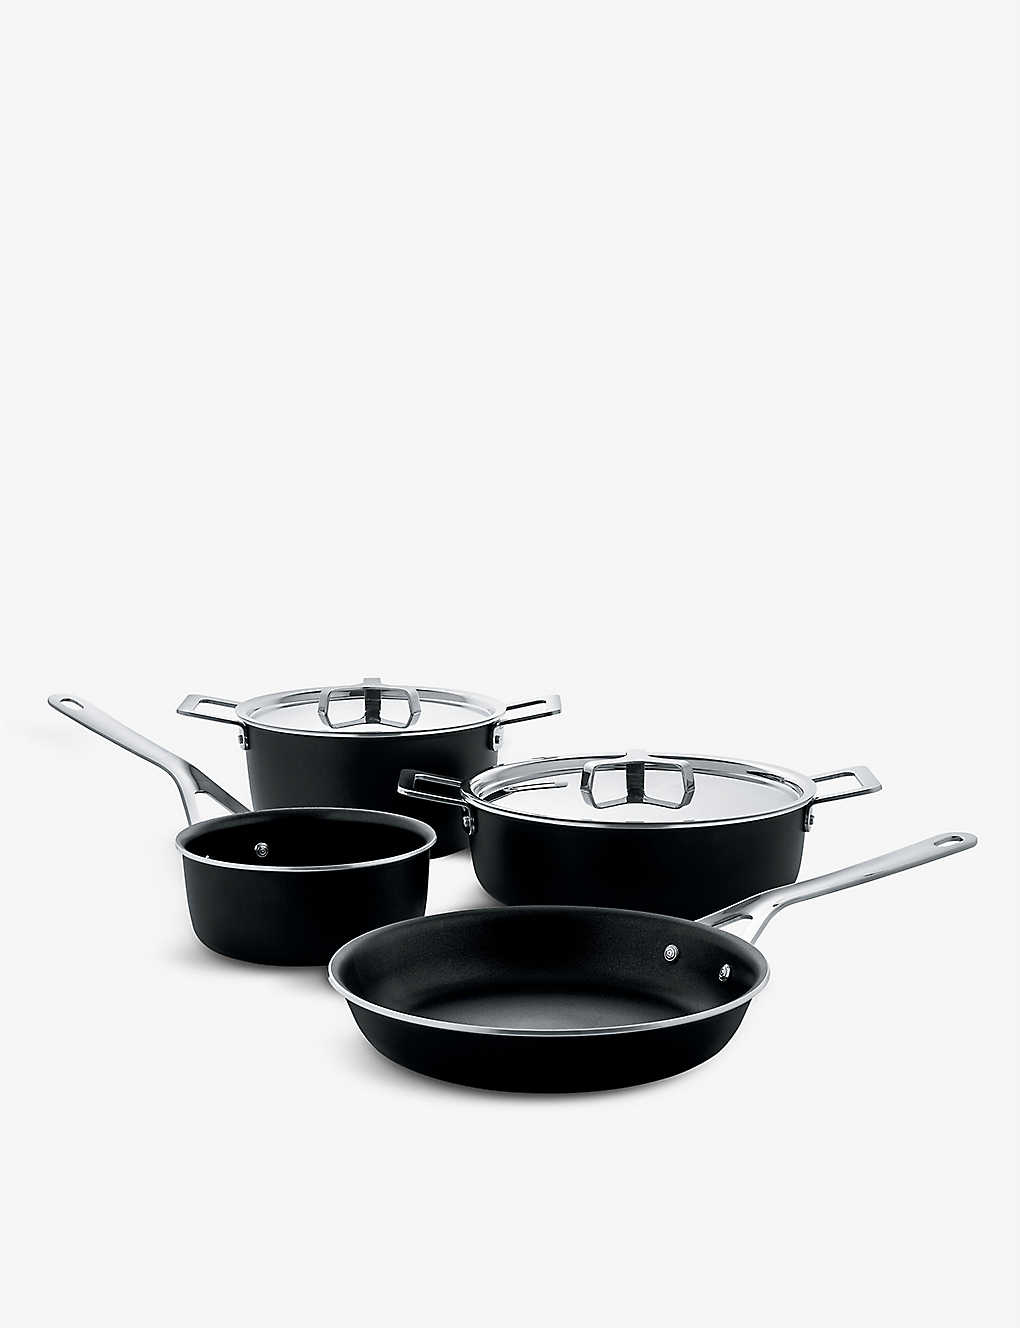 ALESSI ポッツアンドパン アルミニウム ポット アンド パン 6個セット PotsPans aluminium pots and pans set of six #BLACK